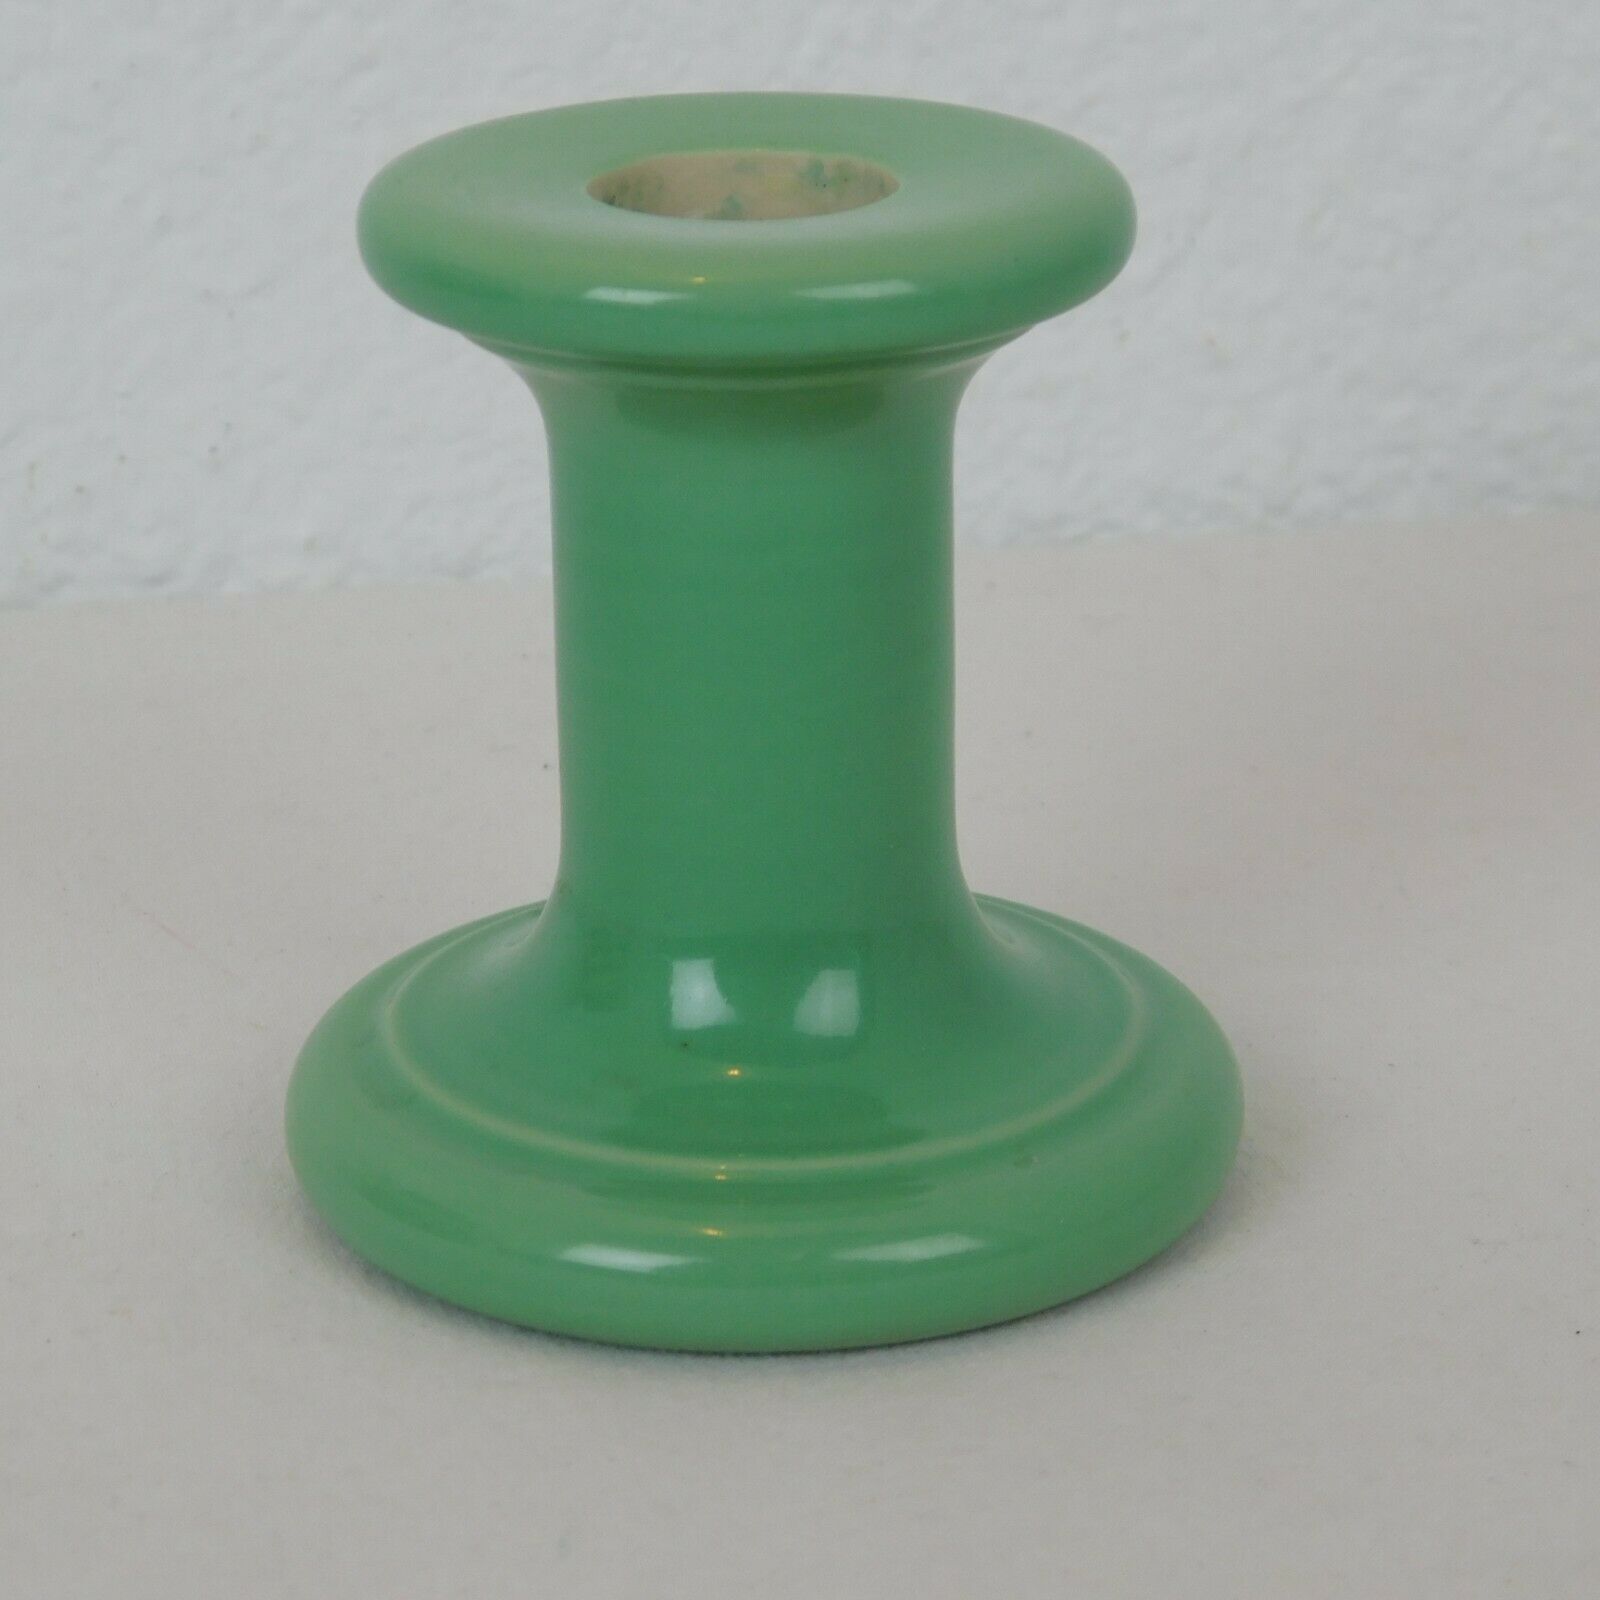 Doulton Mint Green Candlestick Holder England Ceramic Vintage 3.25" High Glossy - $14.52